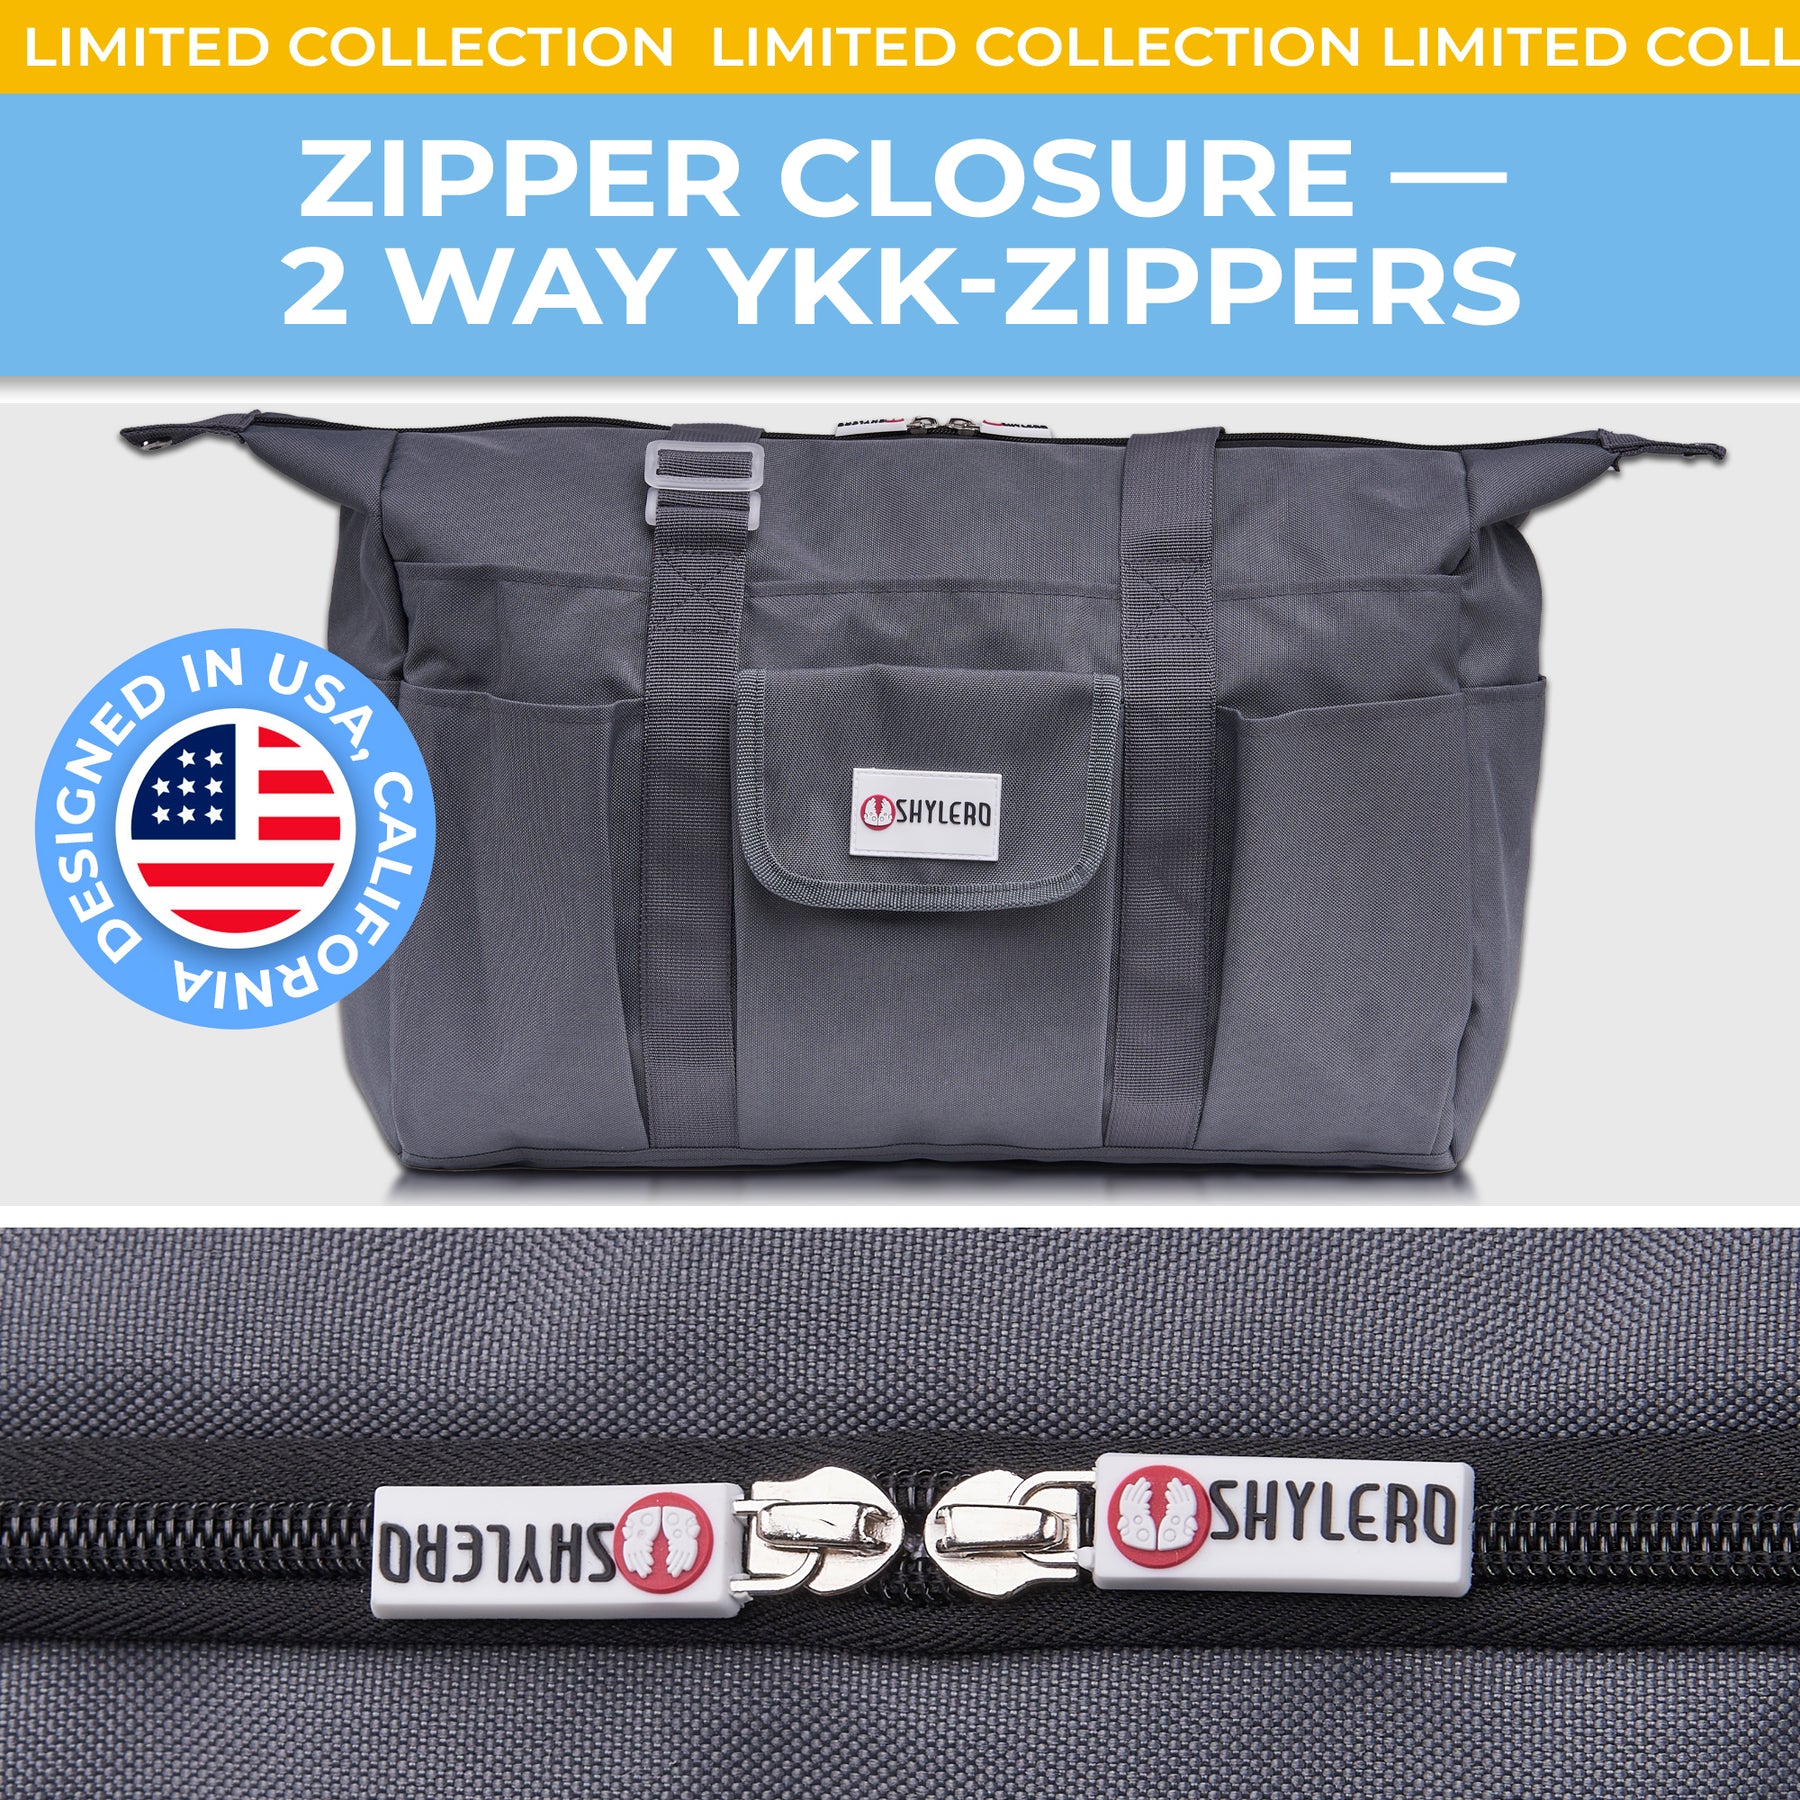 Nurse Bag and Utility Tote | Waterproof | Top YKK® Zip | L18" x H14" x W7" (46x18x36cm) | Solid Grey